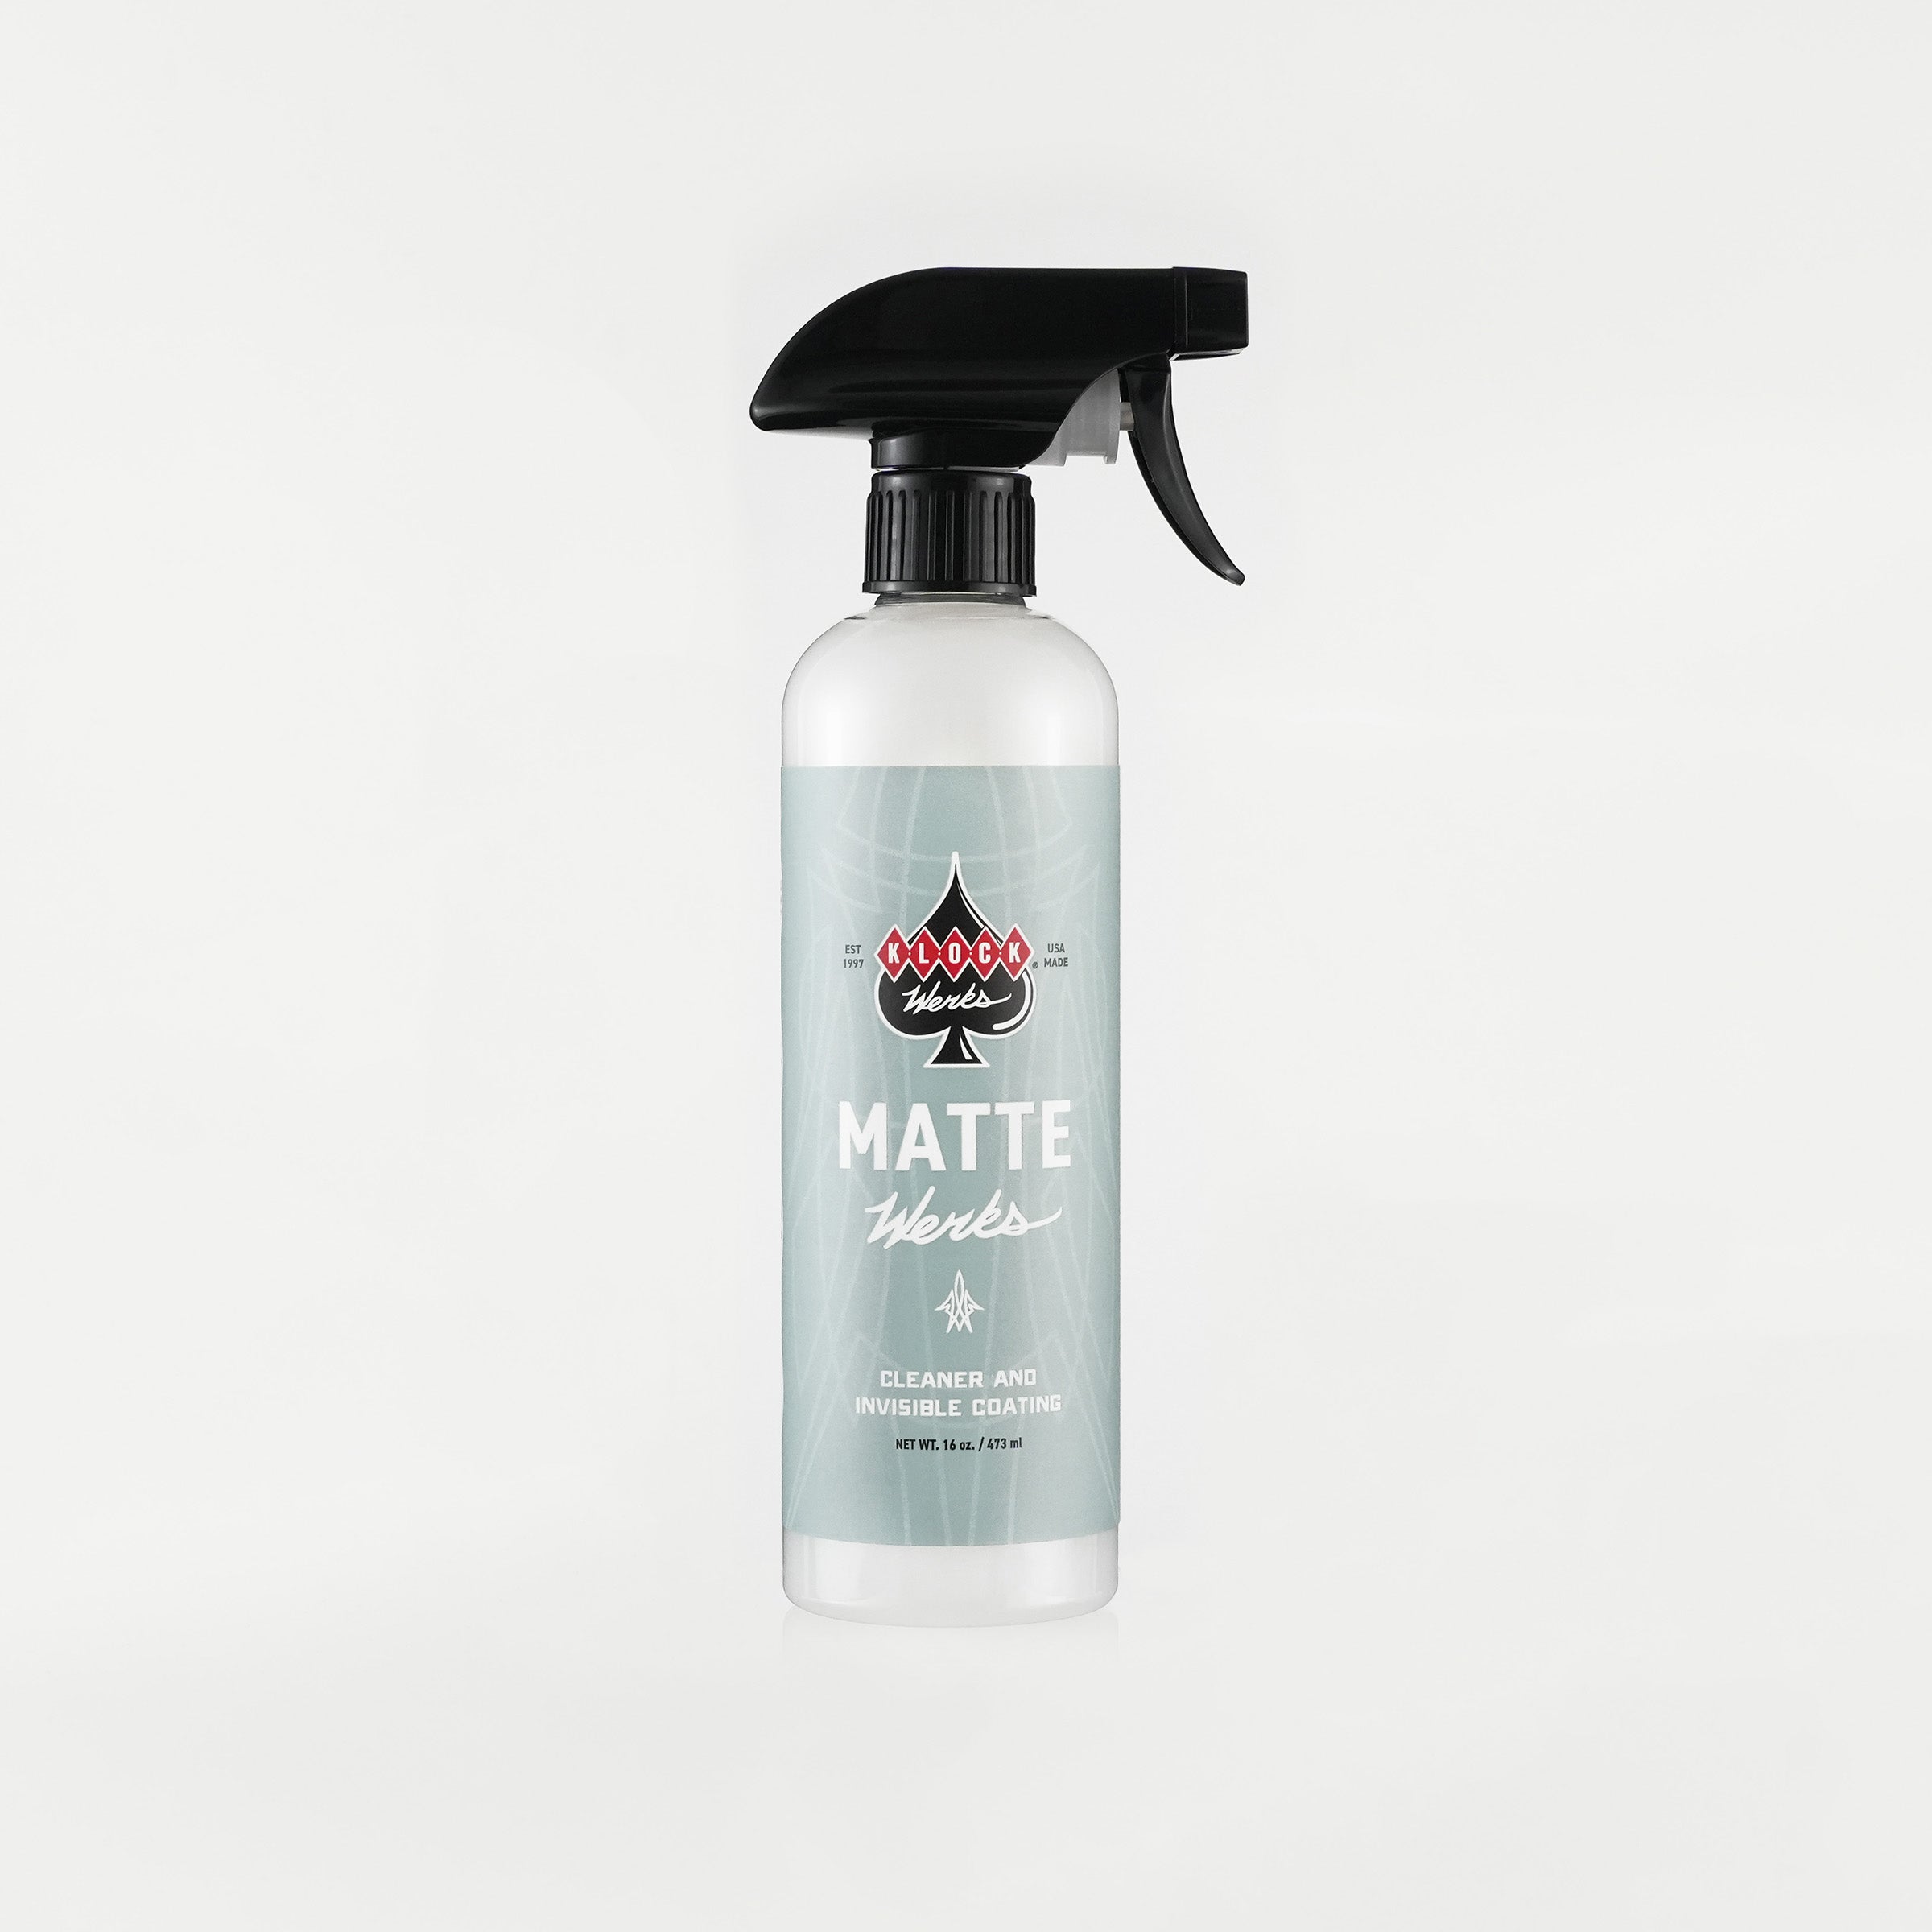 16 ounce Matte Werks cleaning product bottle(16 oz. Matte Werks)